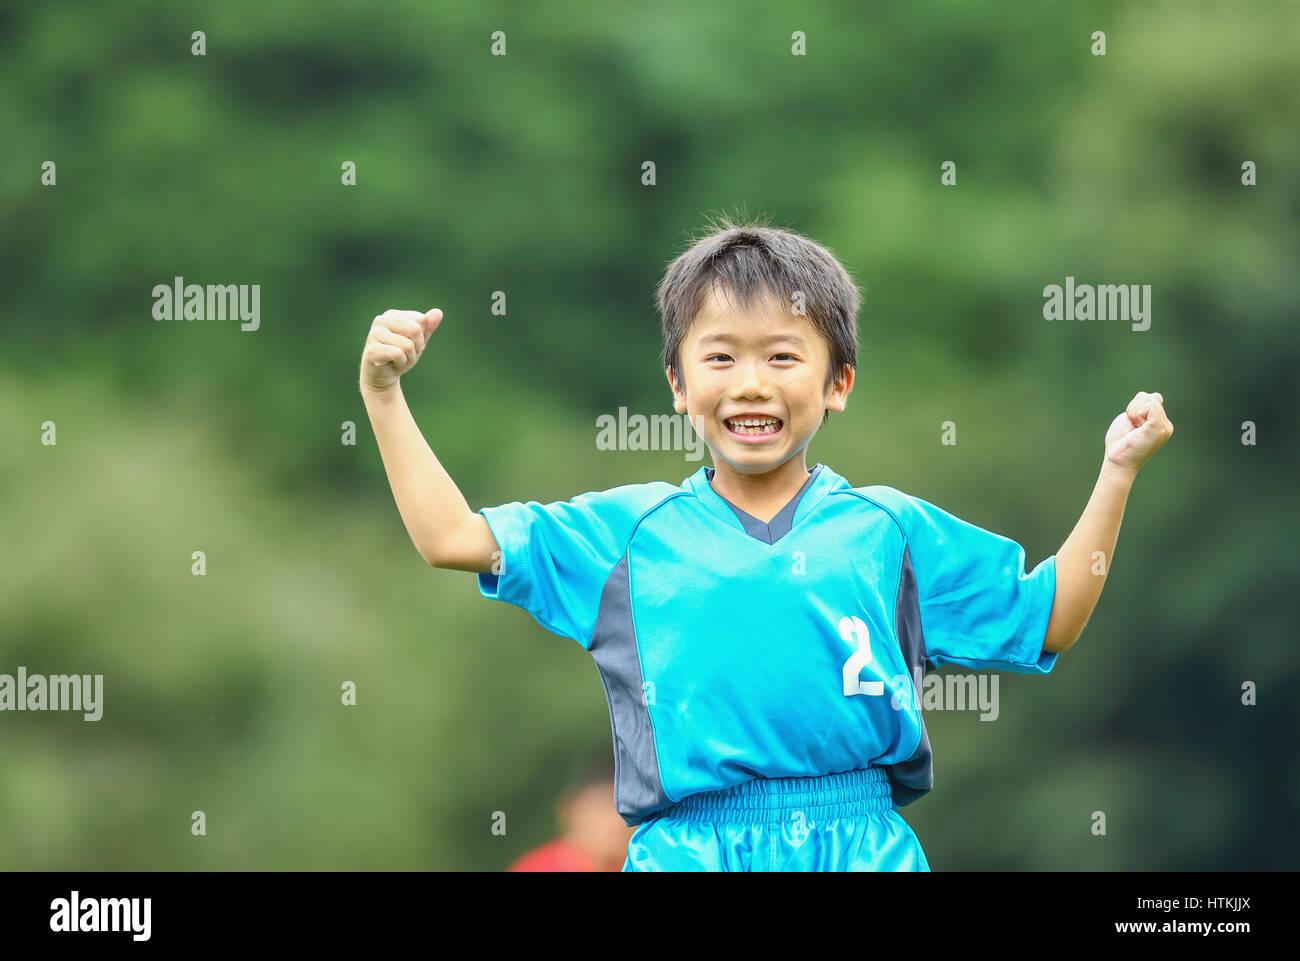 Japanese kid playing soccer Stock Photo